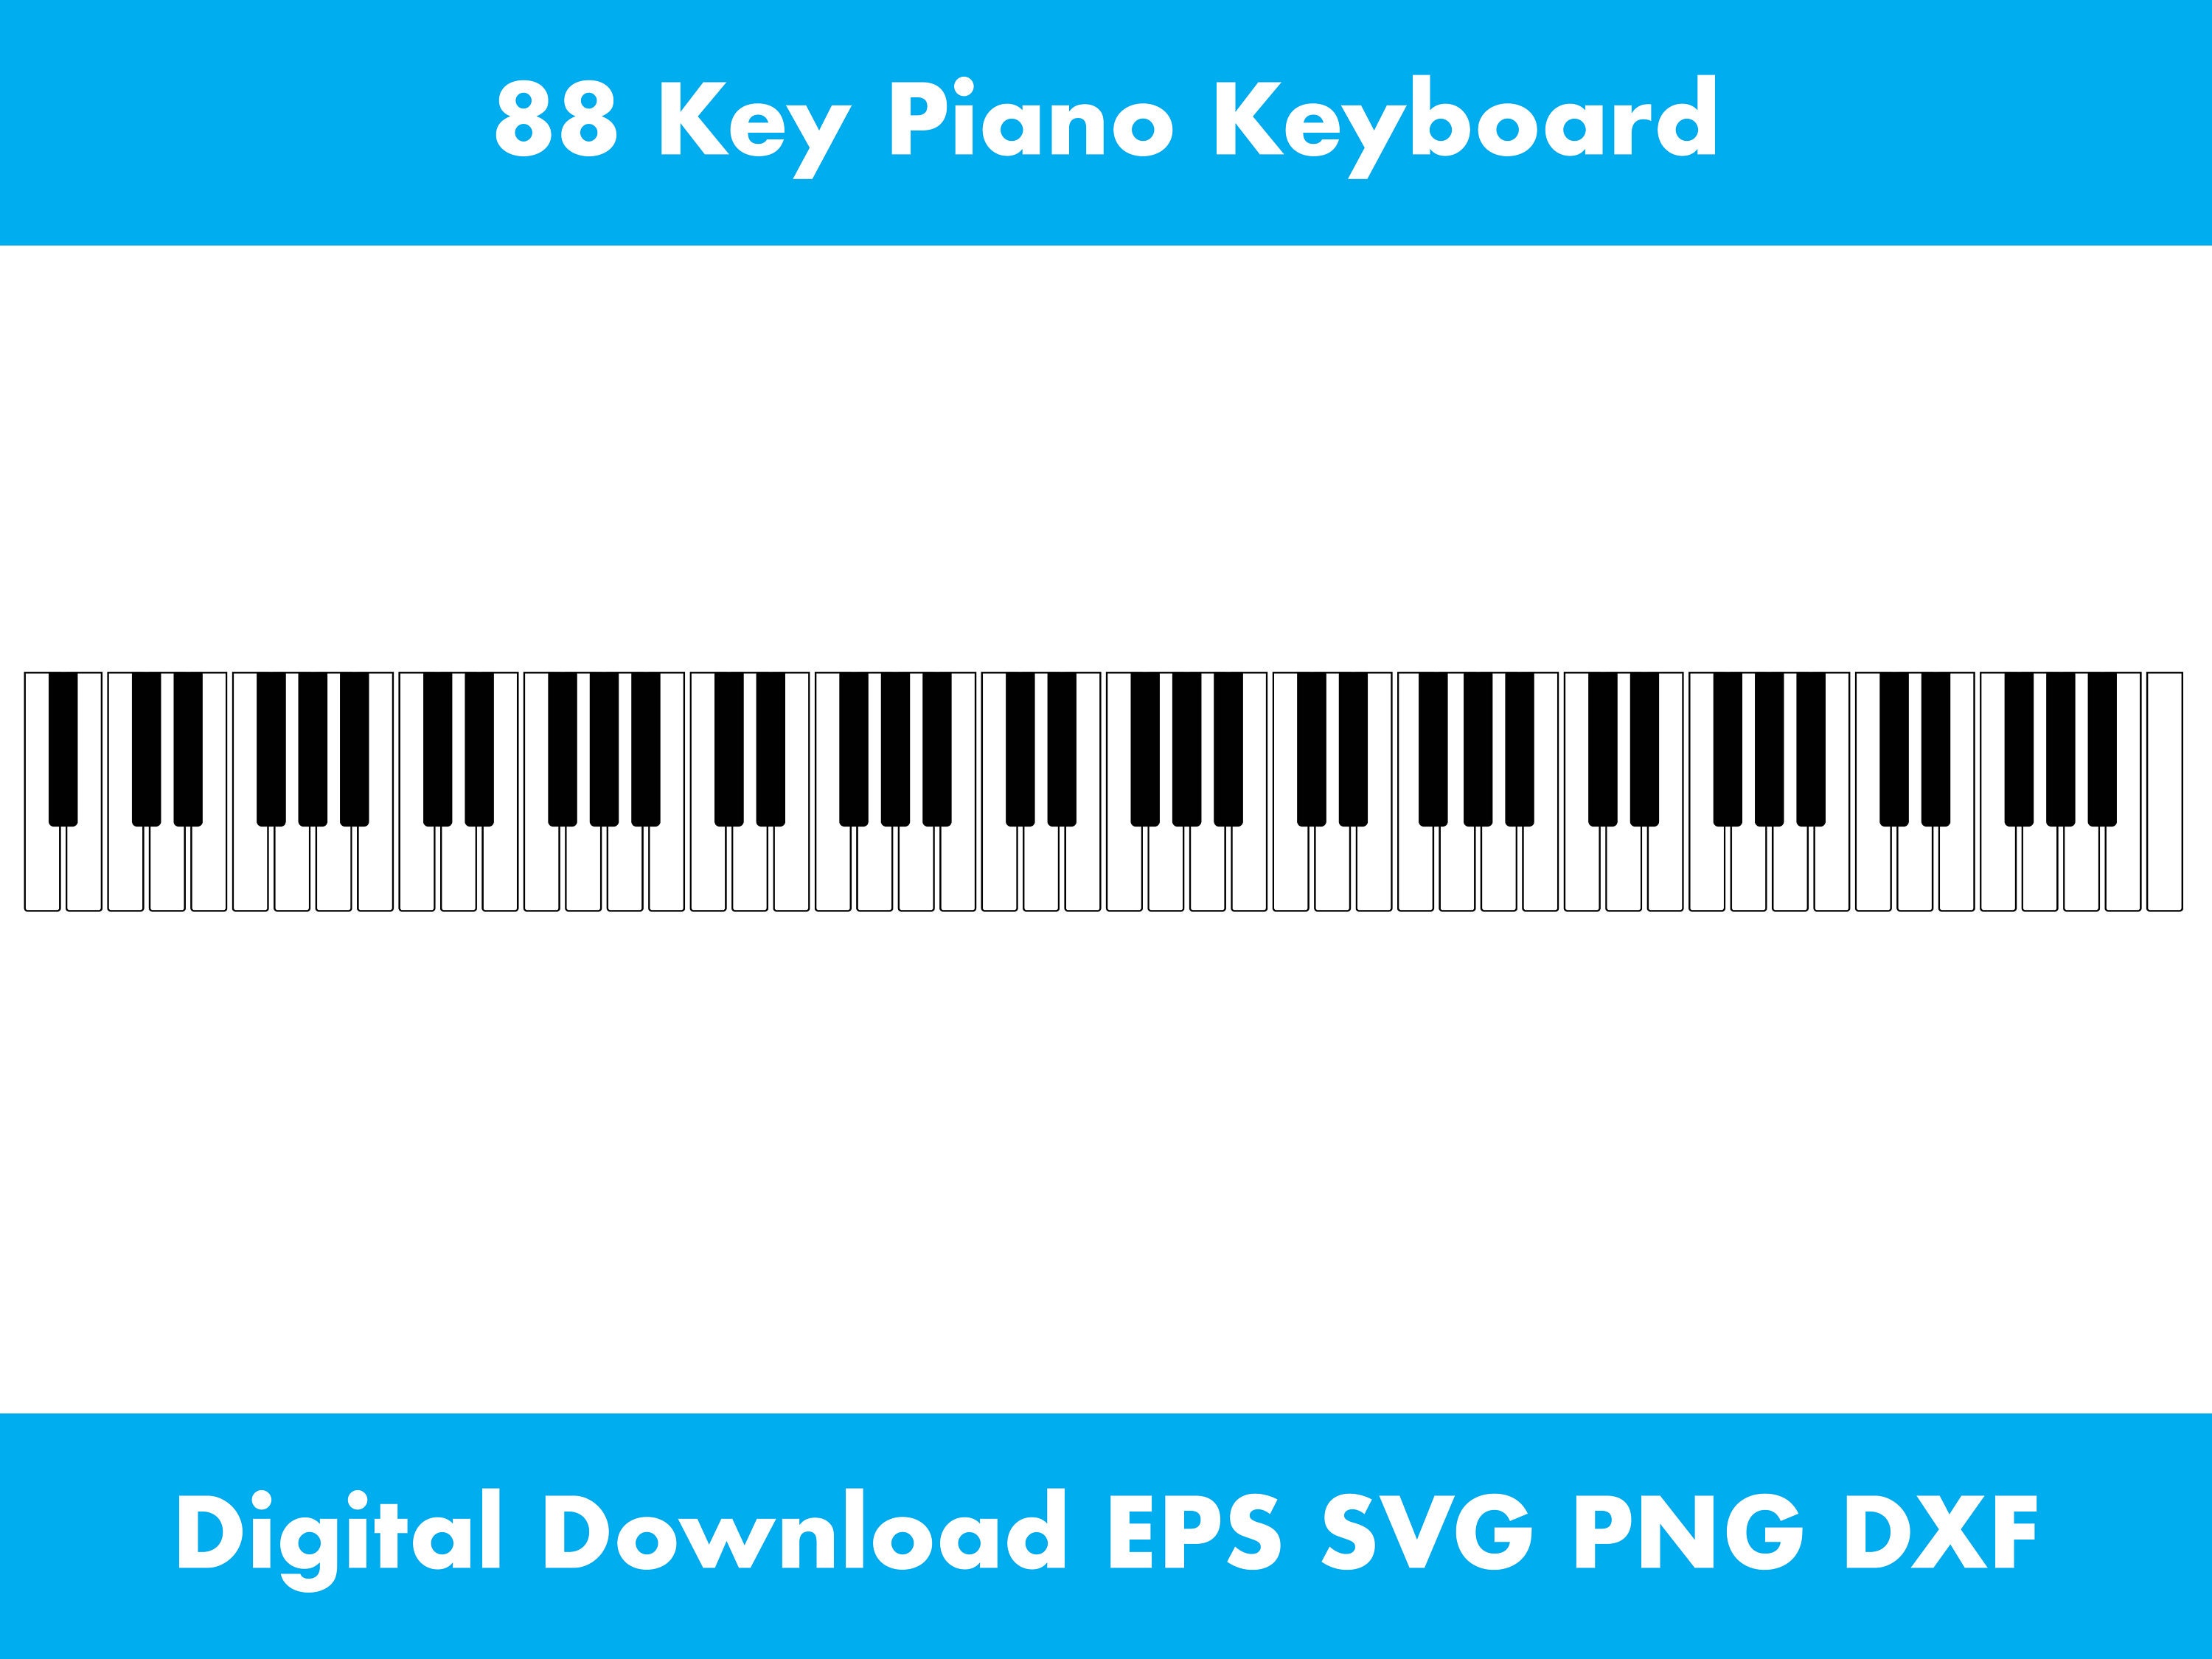  BEATBIT Piano Note Strips with Solfege (Do Re Mi